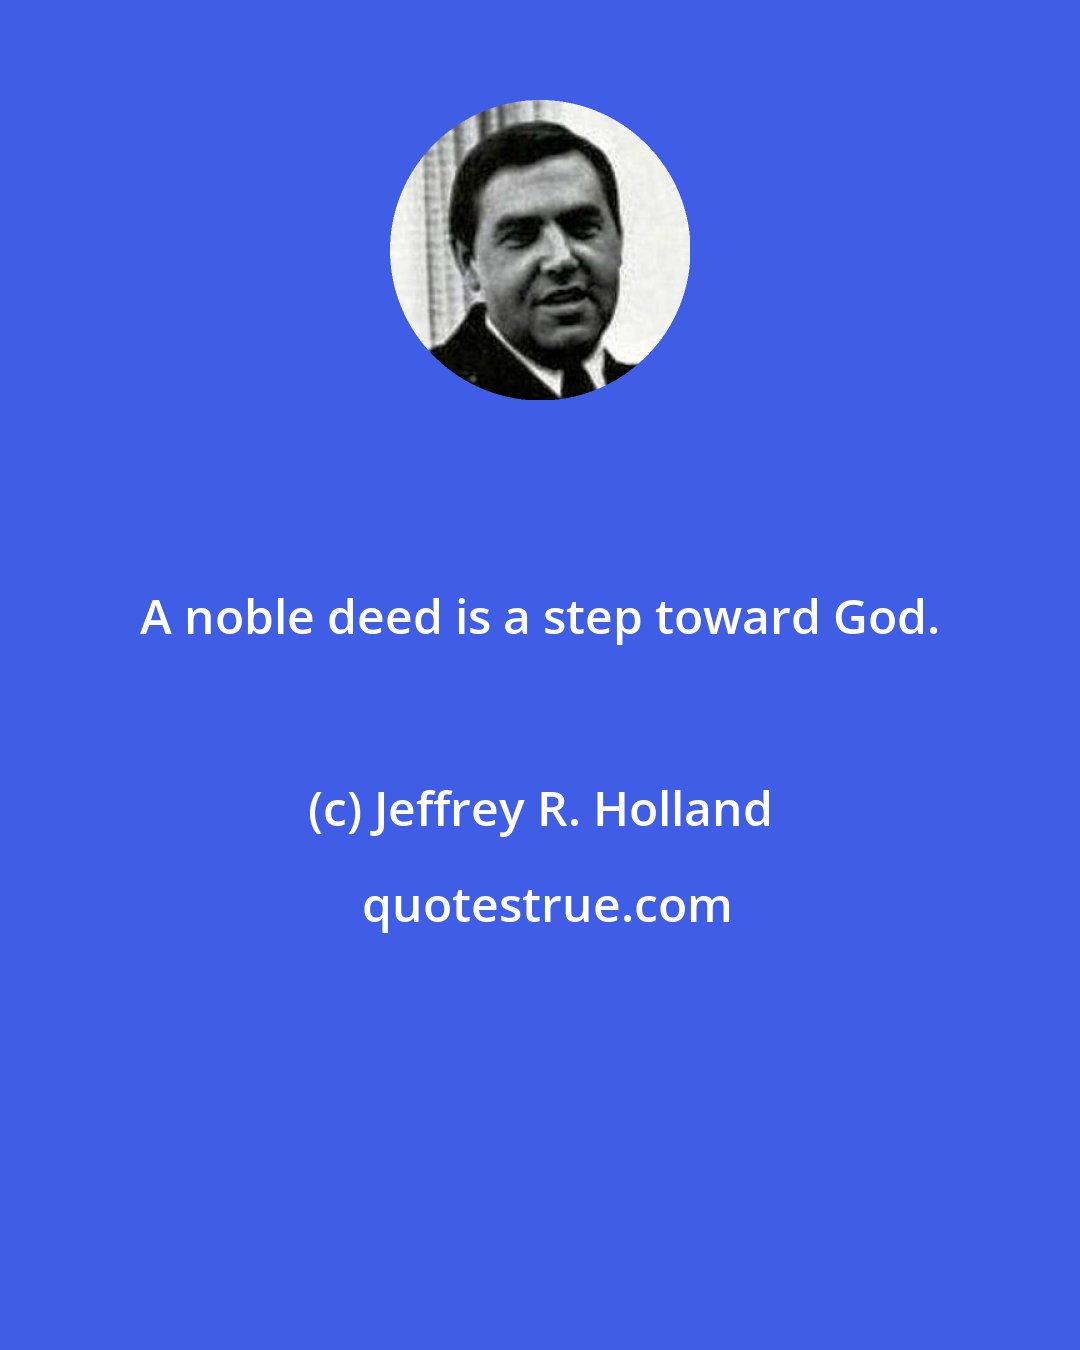 Jeffrey R. Holland: A noble deed is a step toward God.